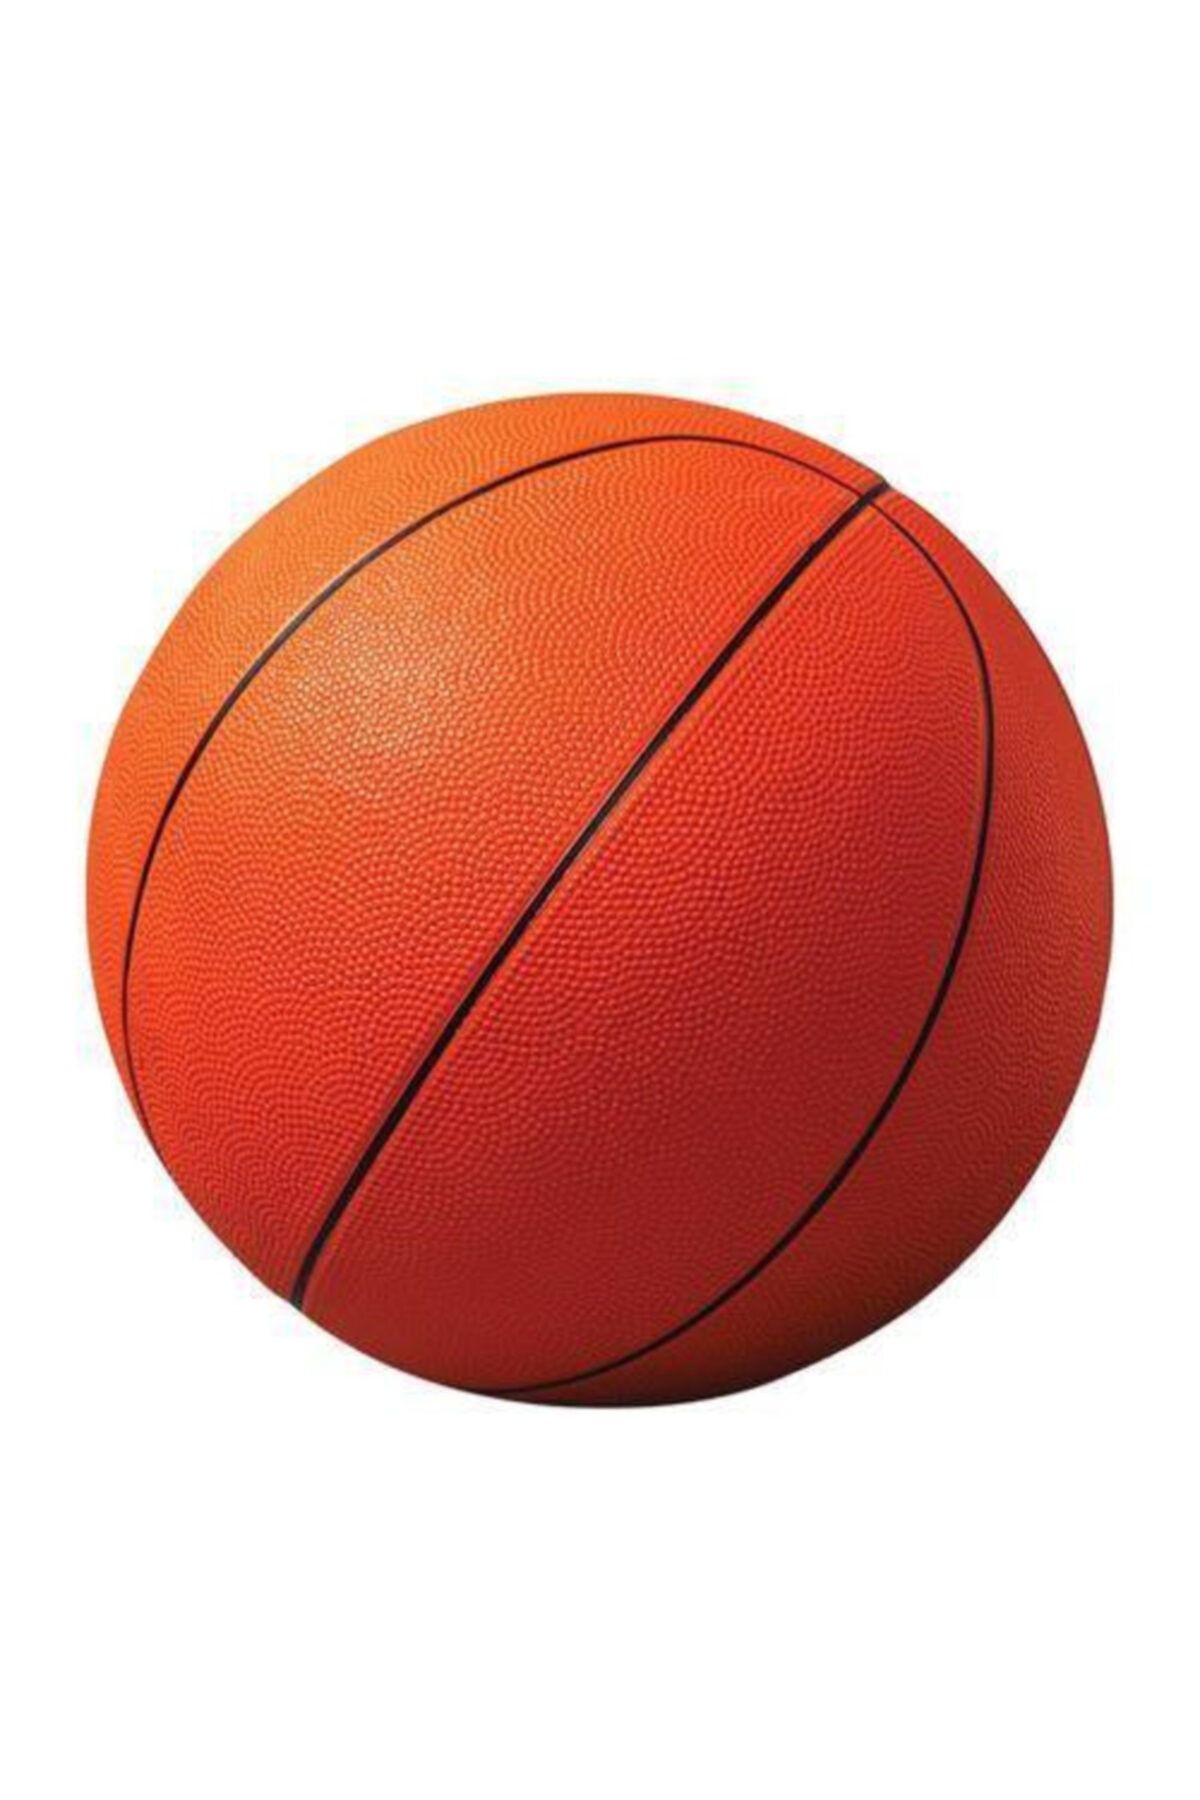 maazasenin Kauçuk Profesyonel Boy Basketbol Topu